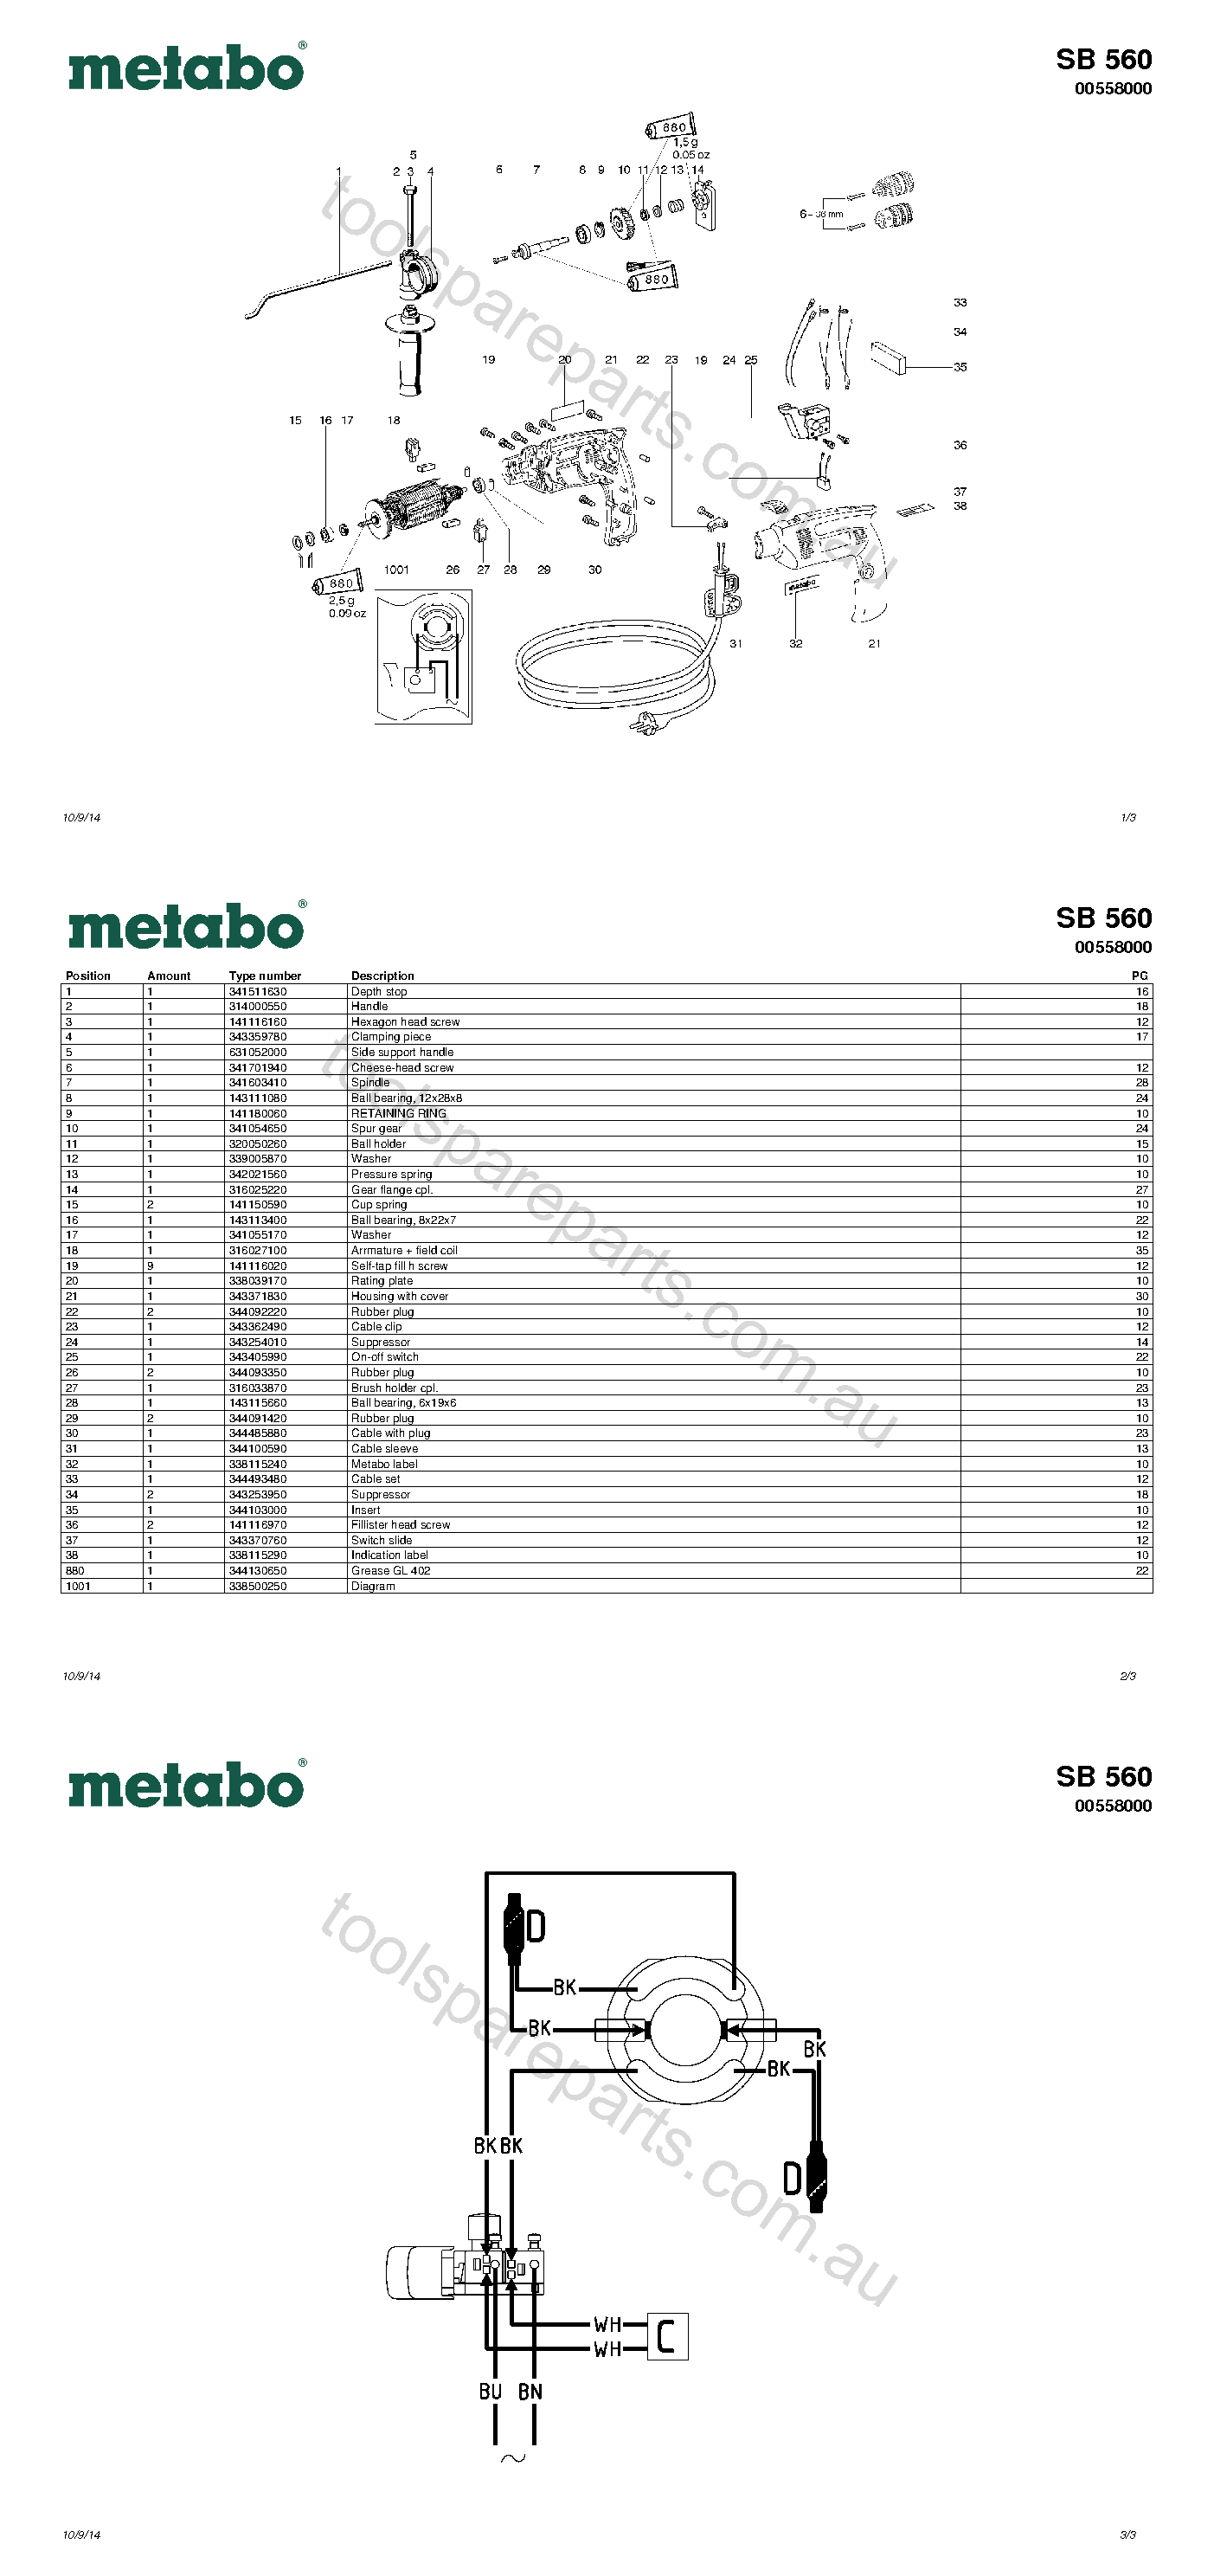 Metabo SB 560 00558000  Diagram 1